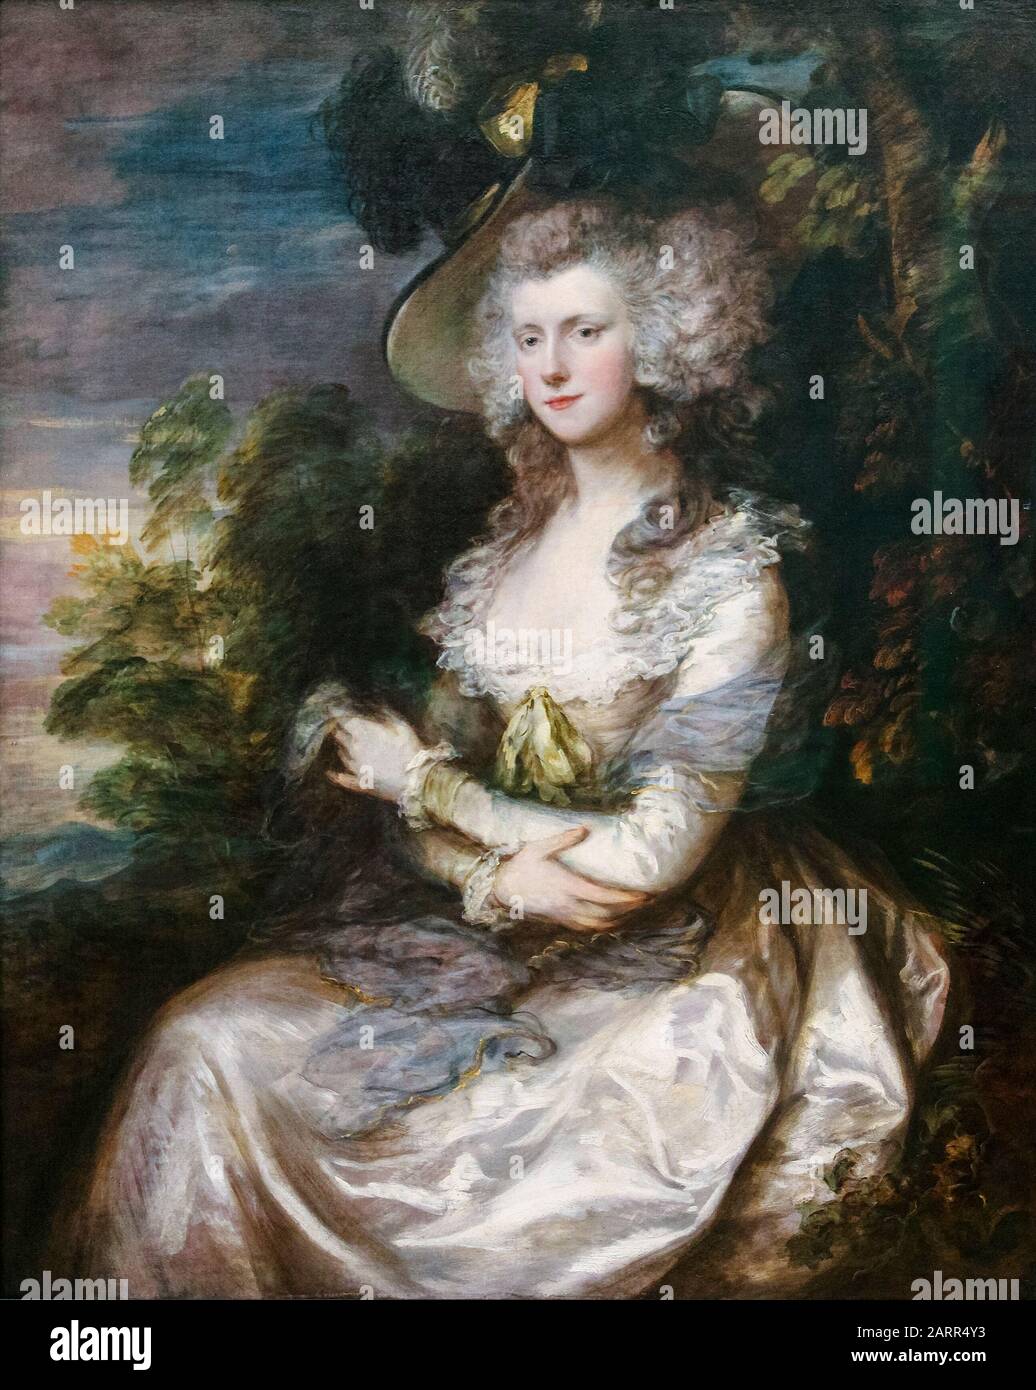 Thomas Gainsborough, Mrs Thomas Hibbert, portrait painting 1786 Stock Photo